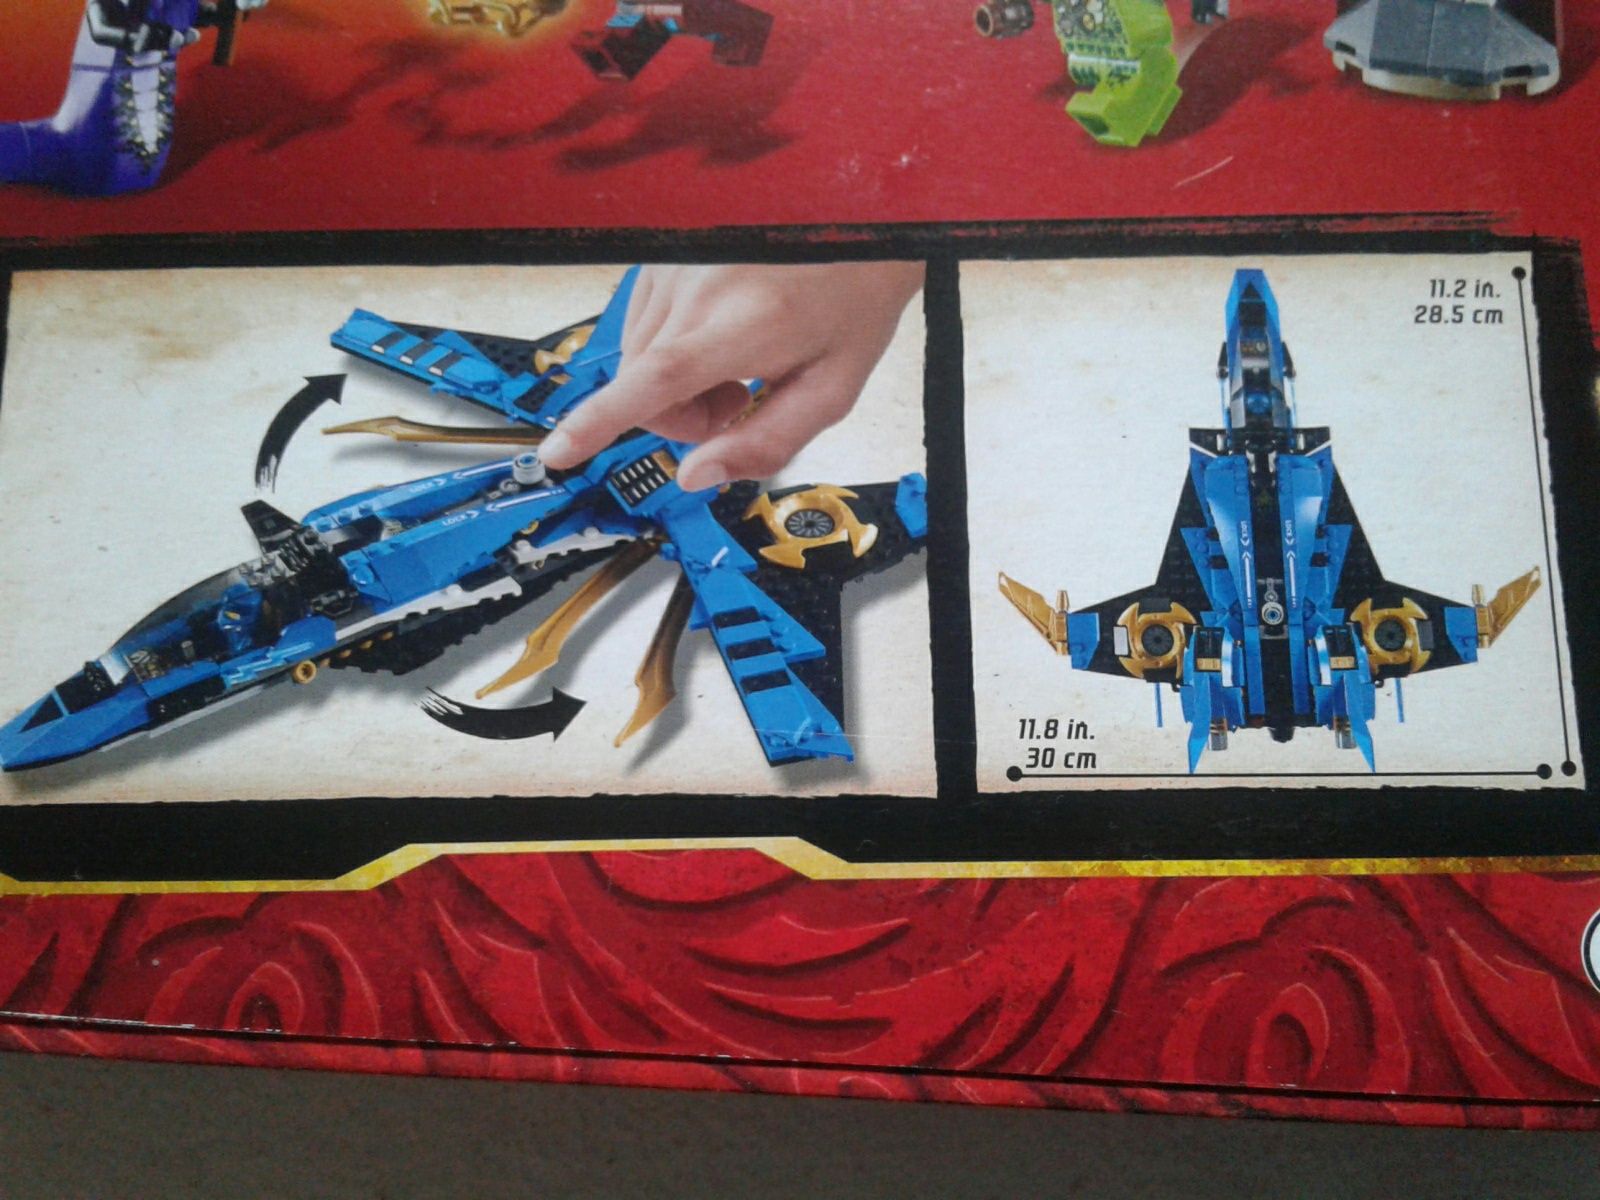 Storm-Fighterul lui Jay, avion Lego Ninjago Legacy 70668, nou, sigilat